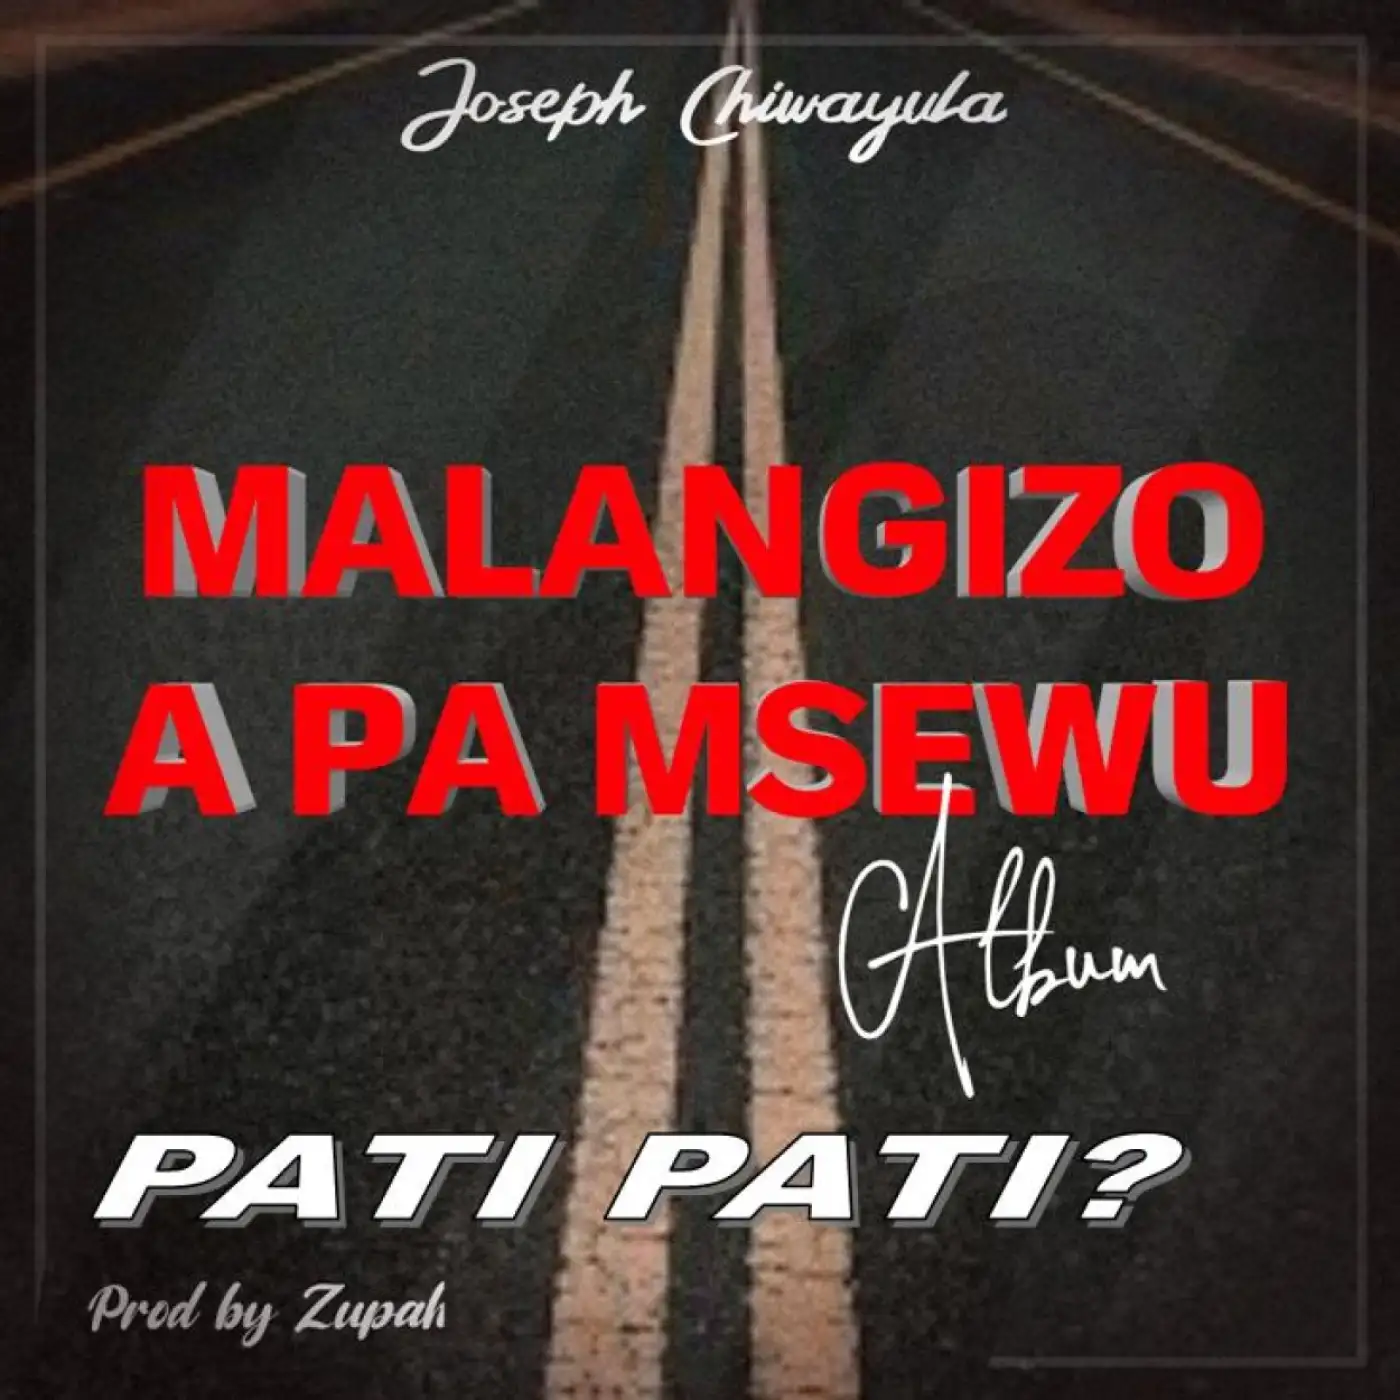 joseph-chiwayula-pati-pati-mp3-download-mp3 download